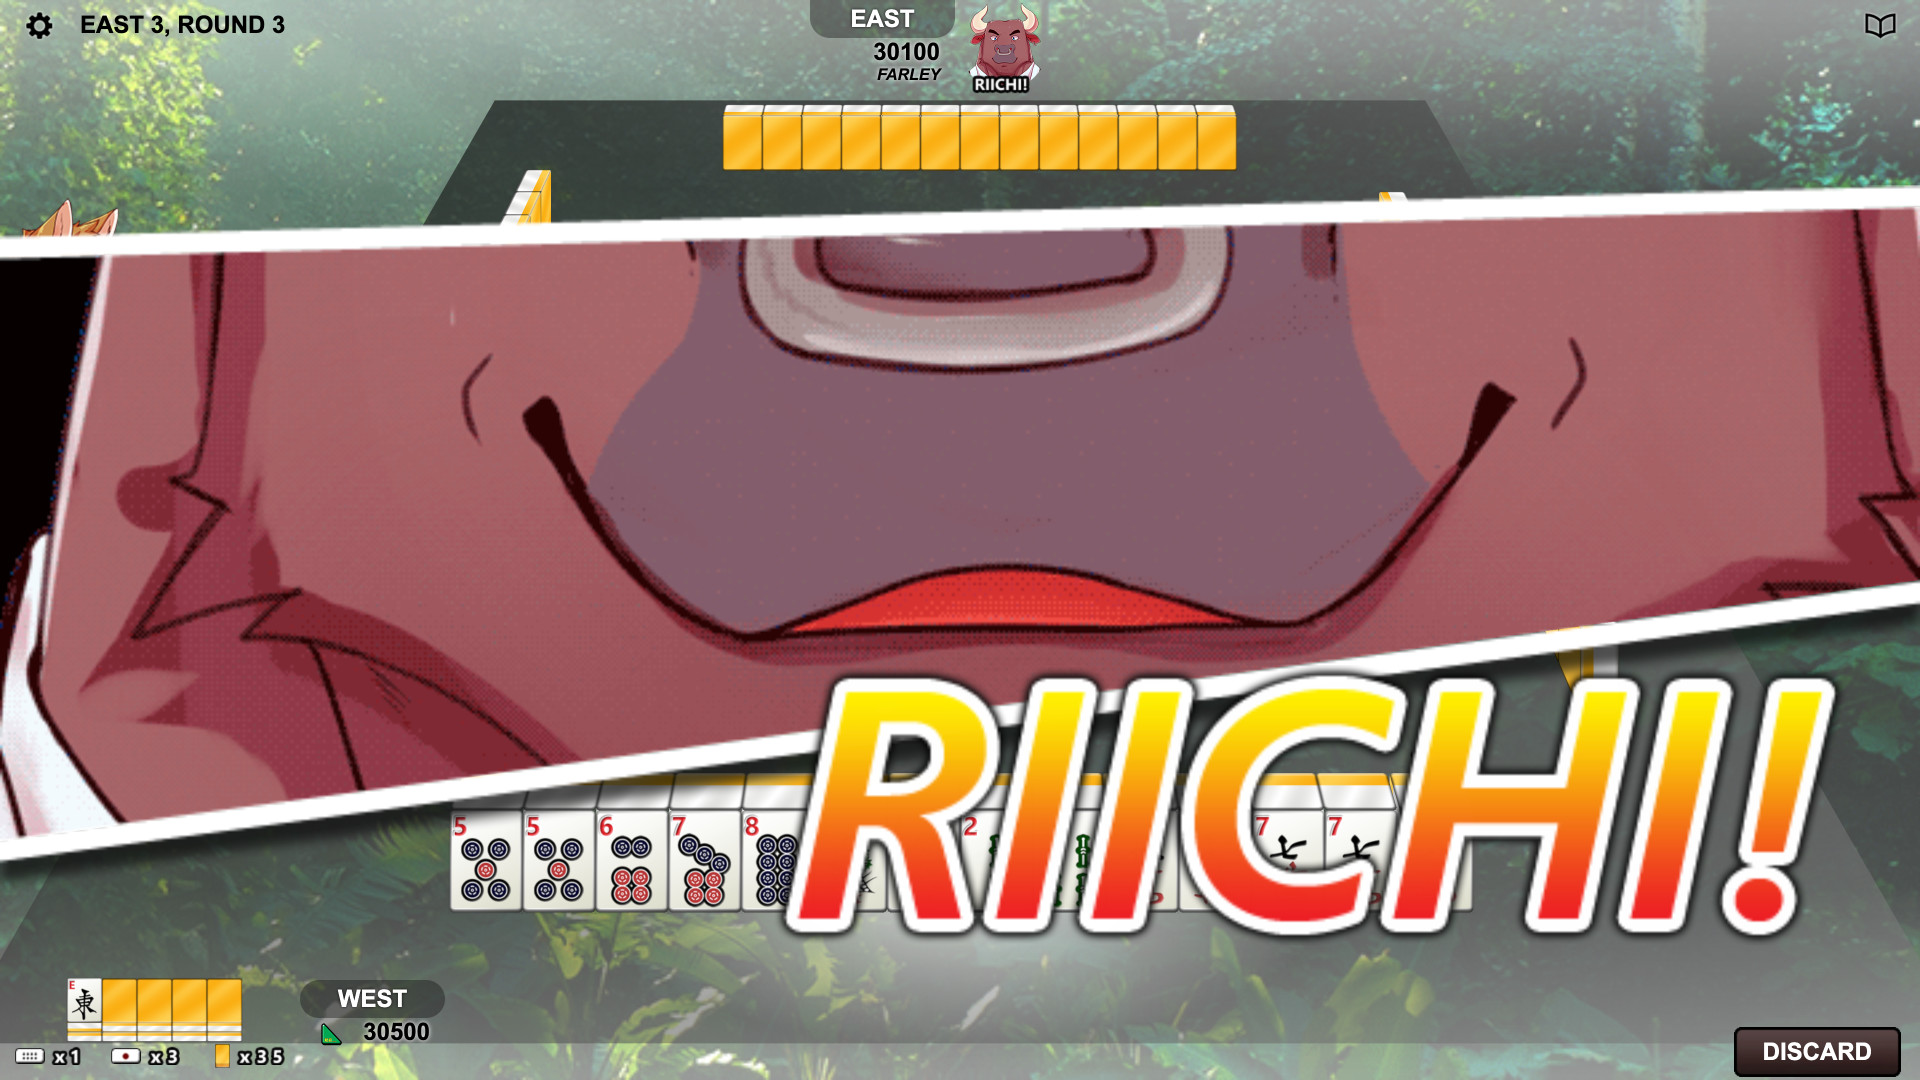 Kemono Mahjong screenshot